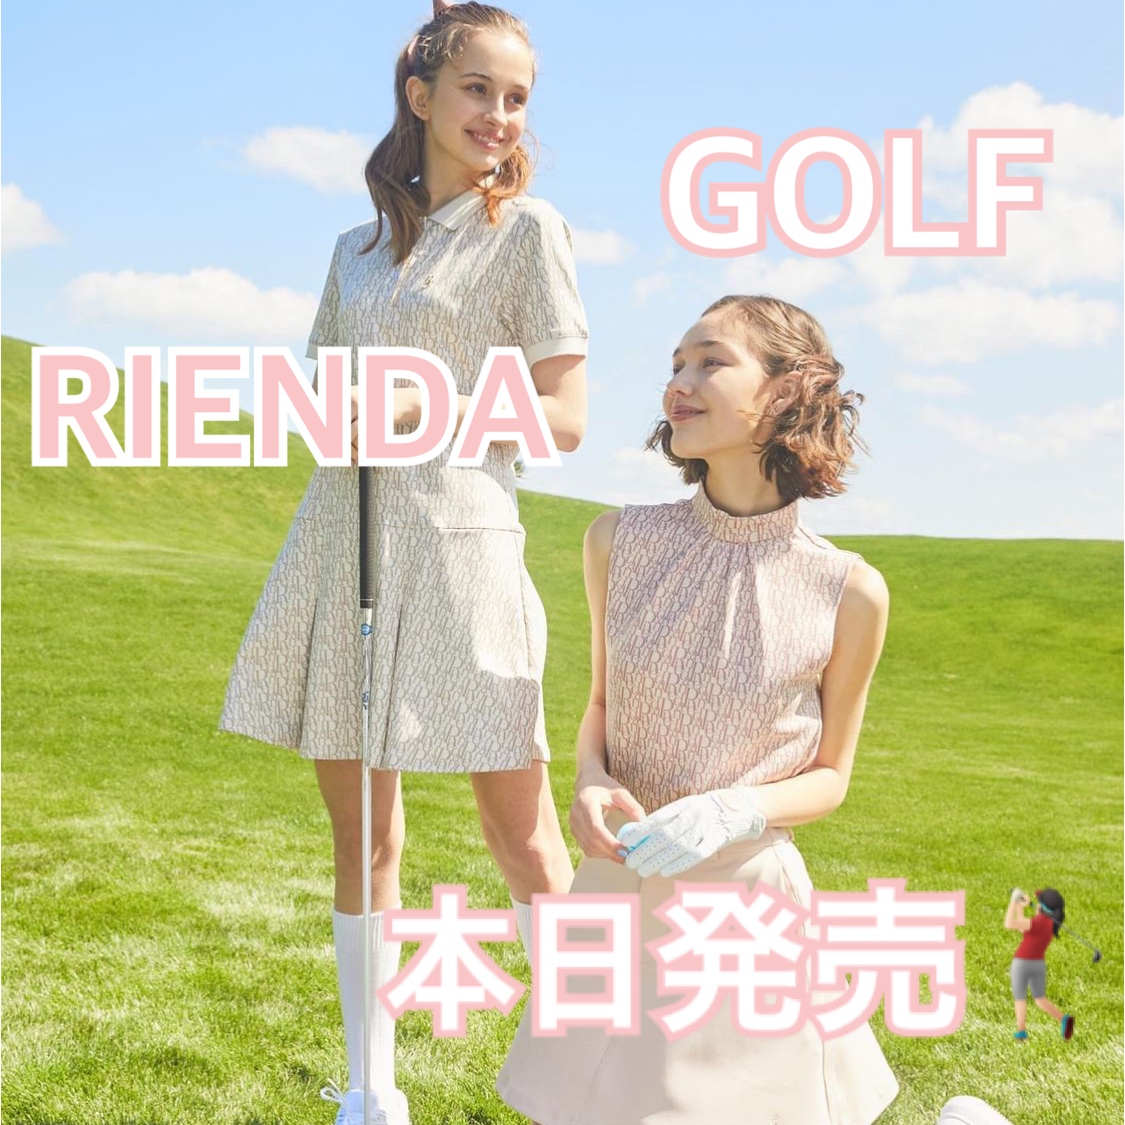 RIENDA GOLF(リエンダゴルフ)のゴルフウェアが発売するよ♡可愛くて